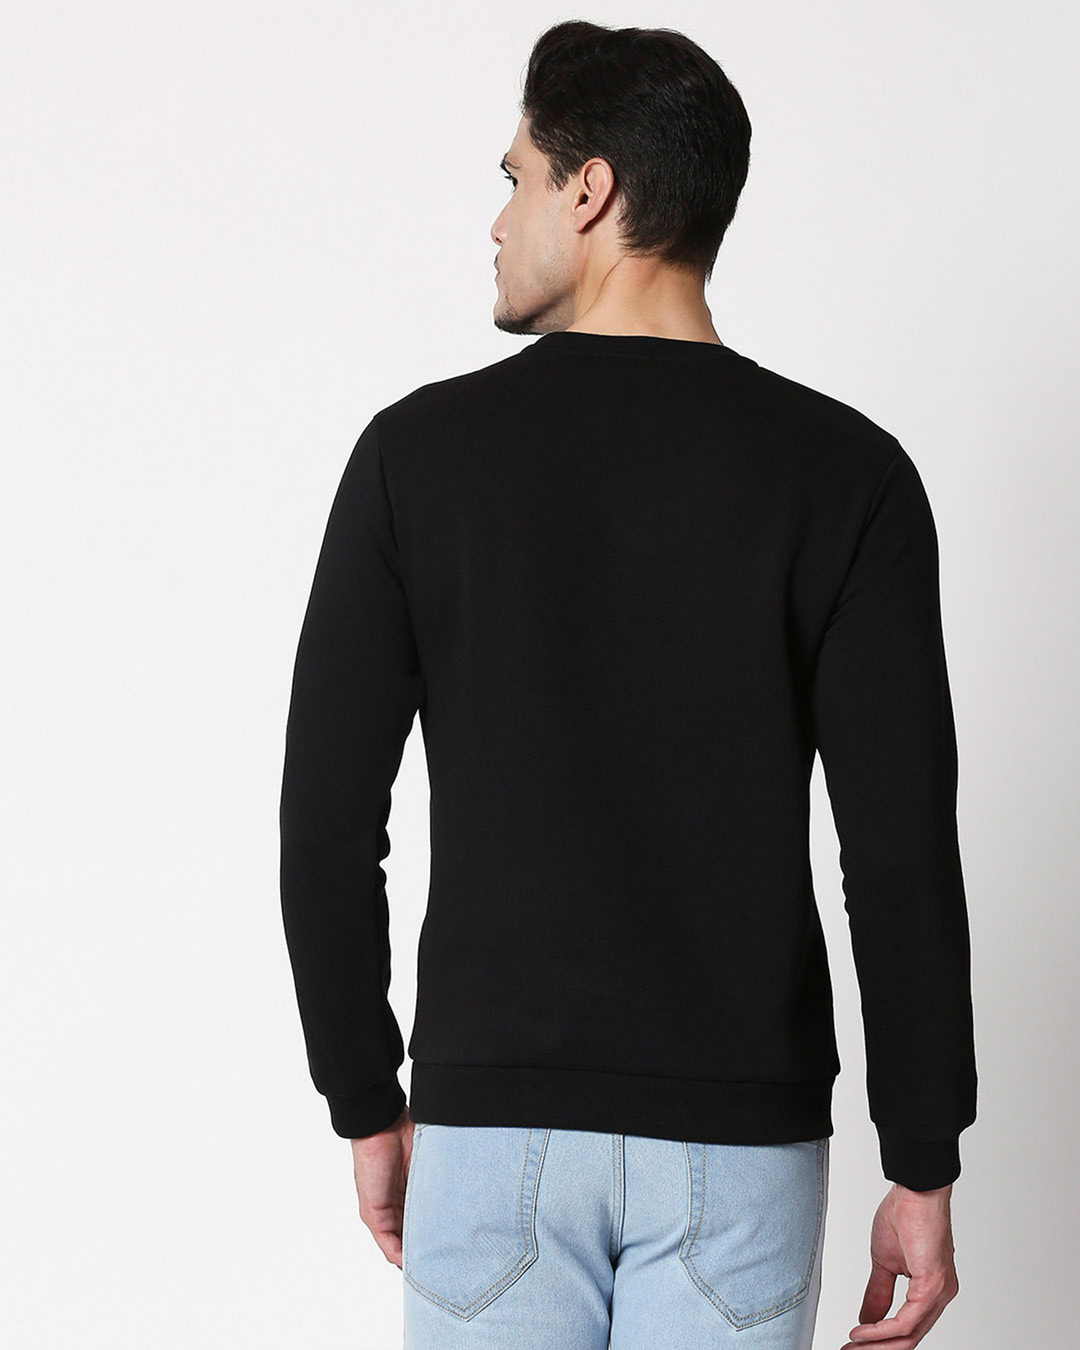 Shop An Imposter Fleece Sweatshirt Black-Back